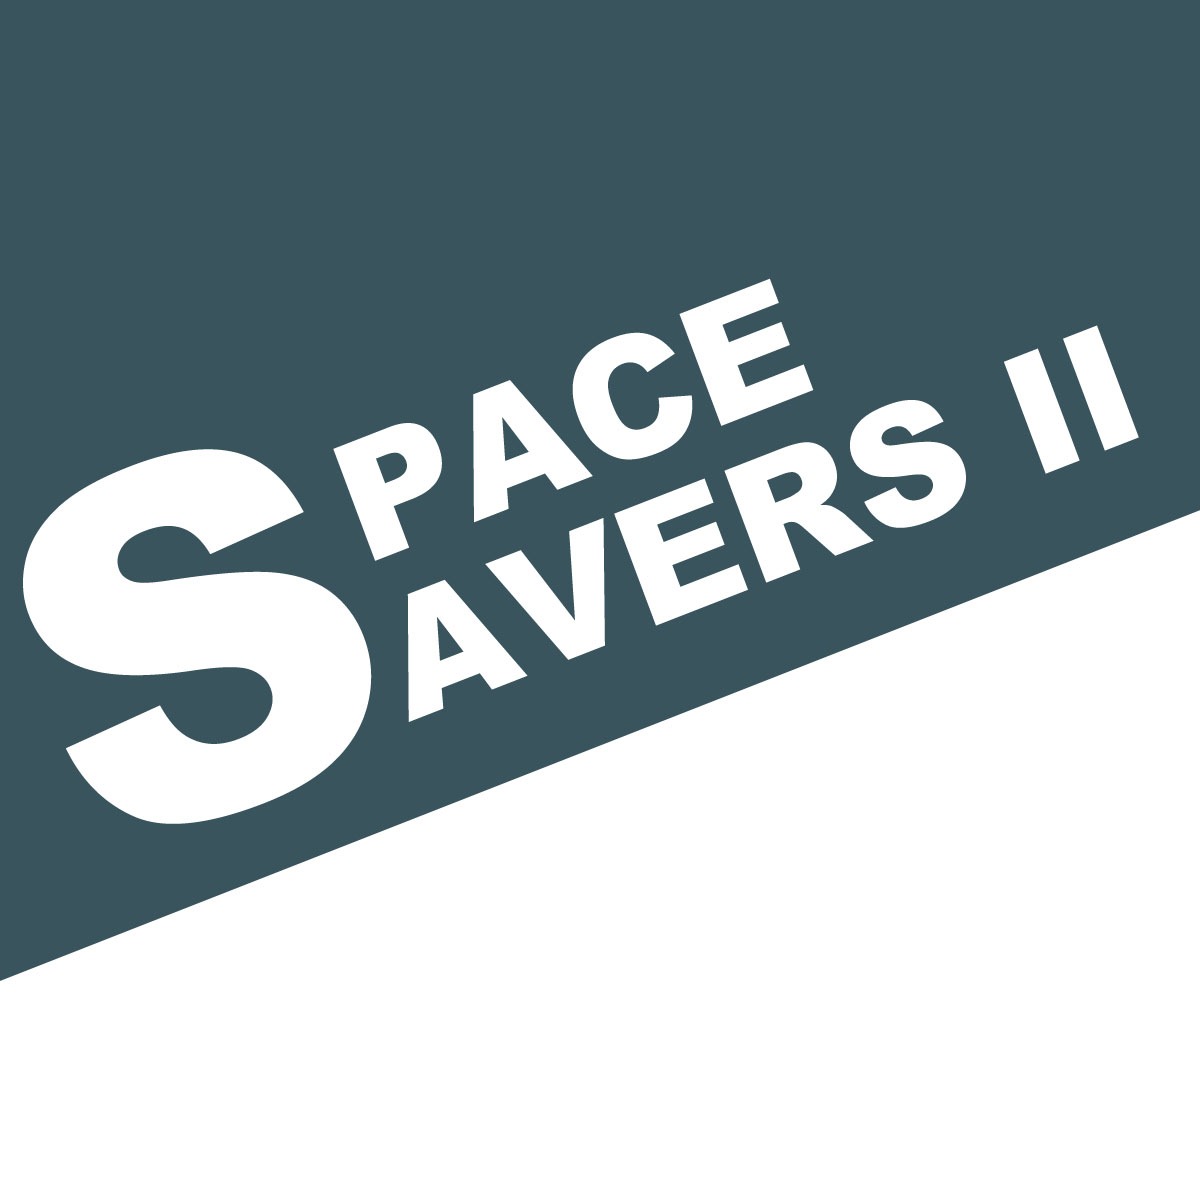 Space Savers II Logo